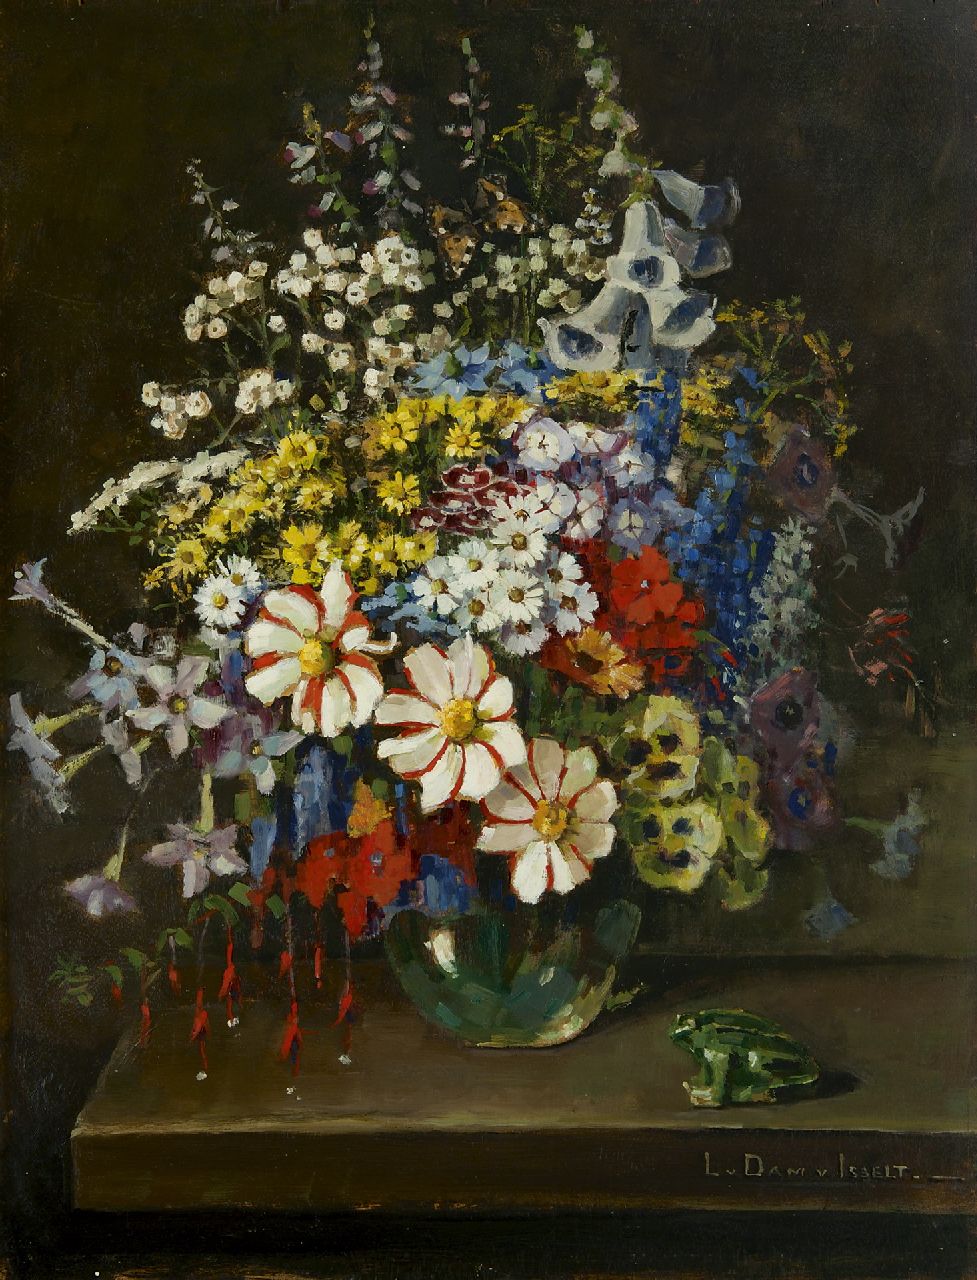 Dam van Isselt L. van | Lucie van Dam van Isselt, Summer flowers, oil on panel 82.8 x 63.0 cm, signed l.r.